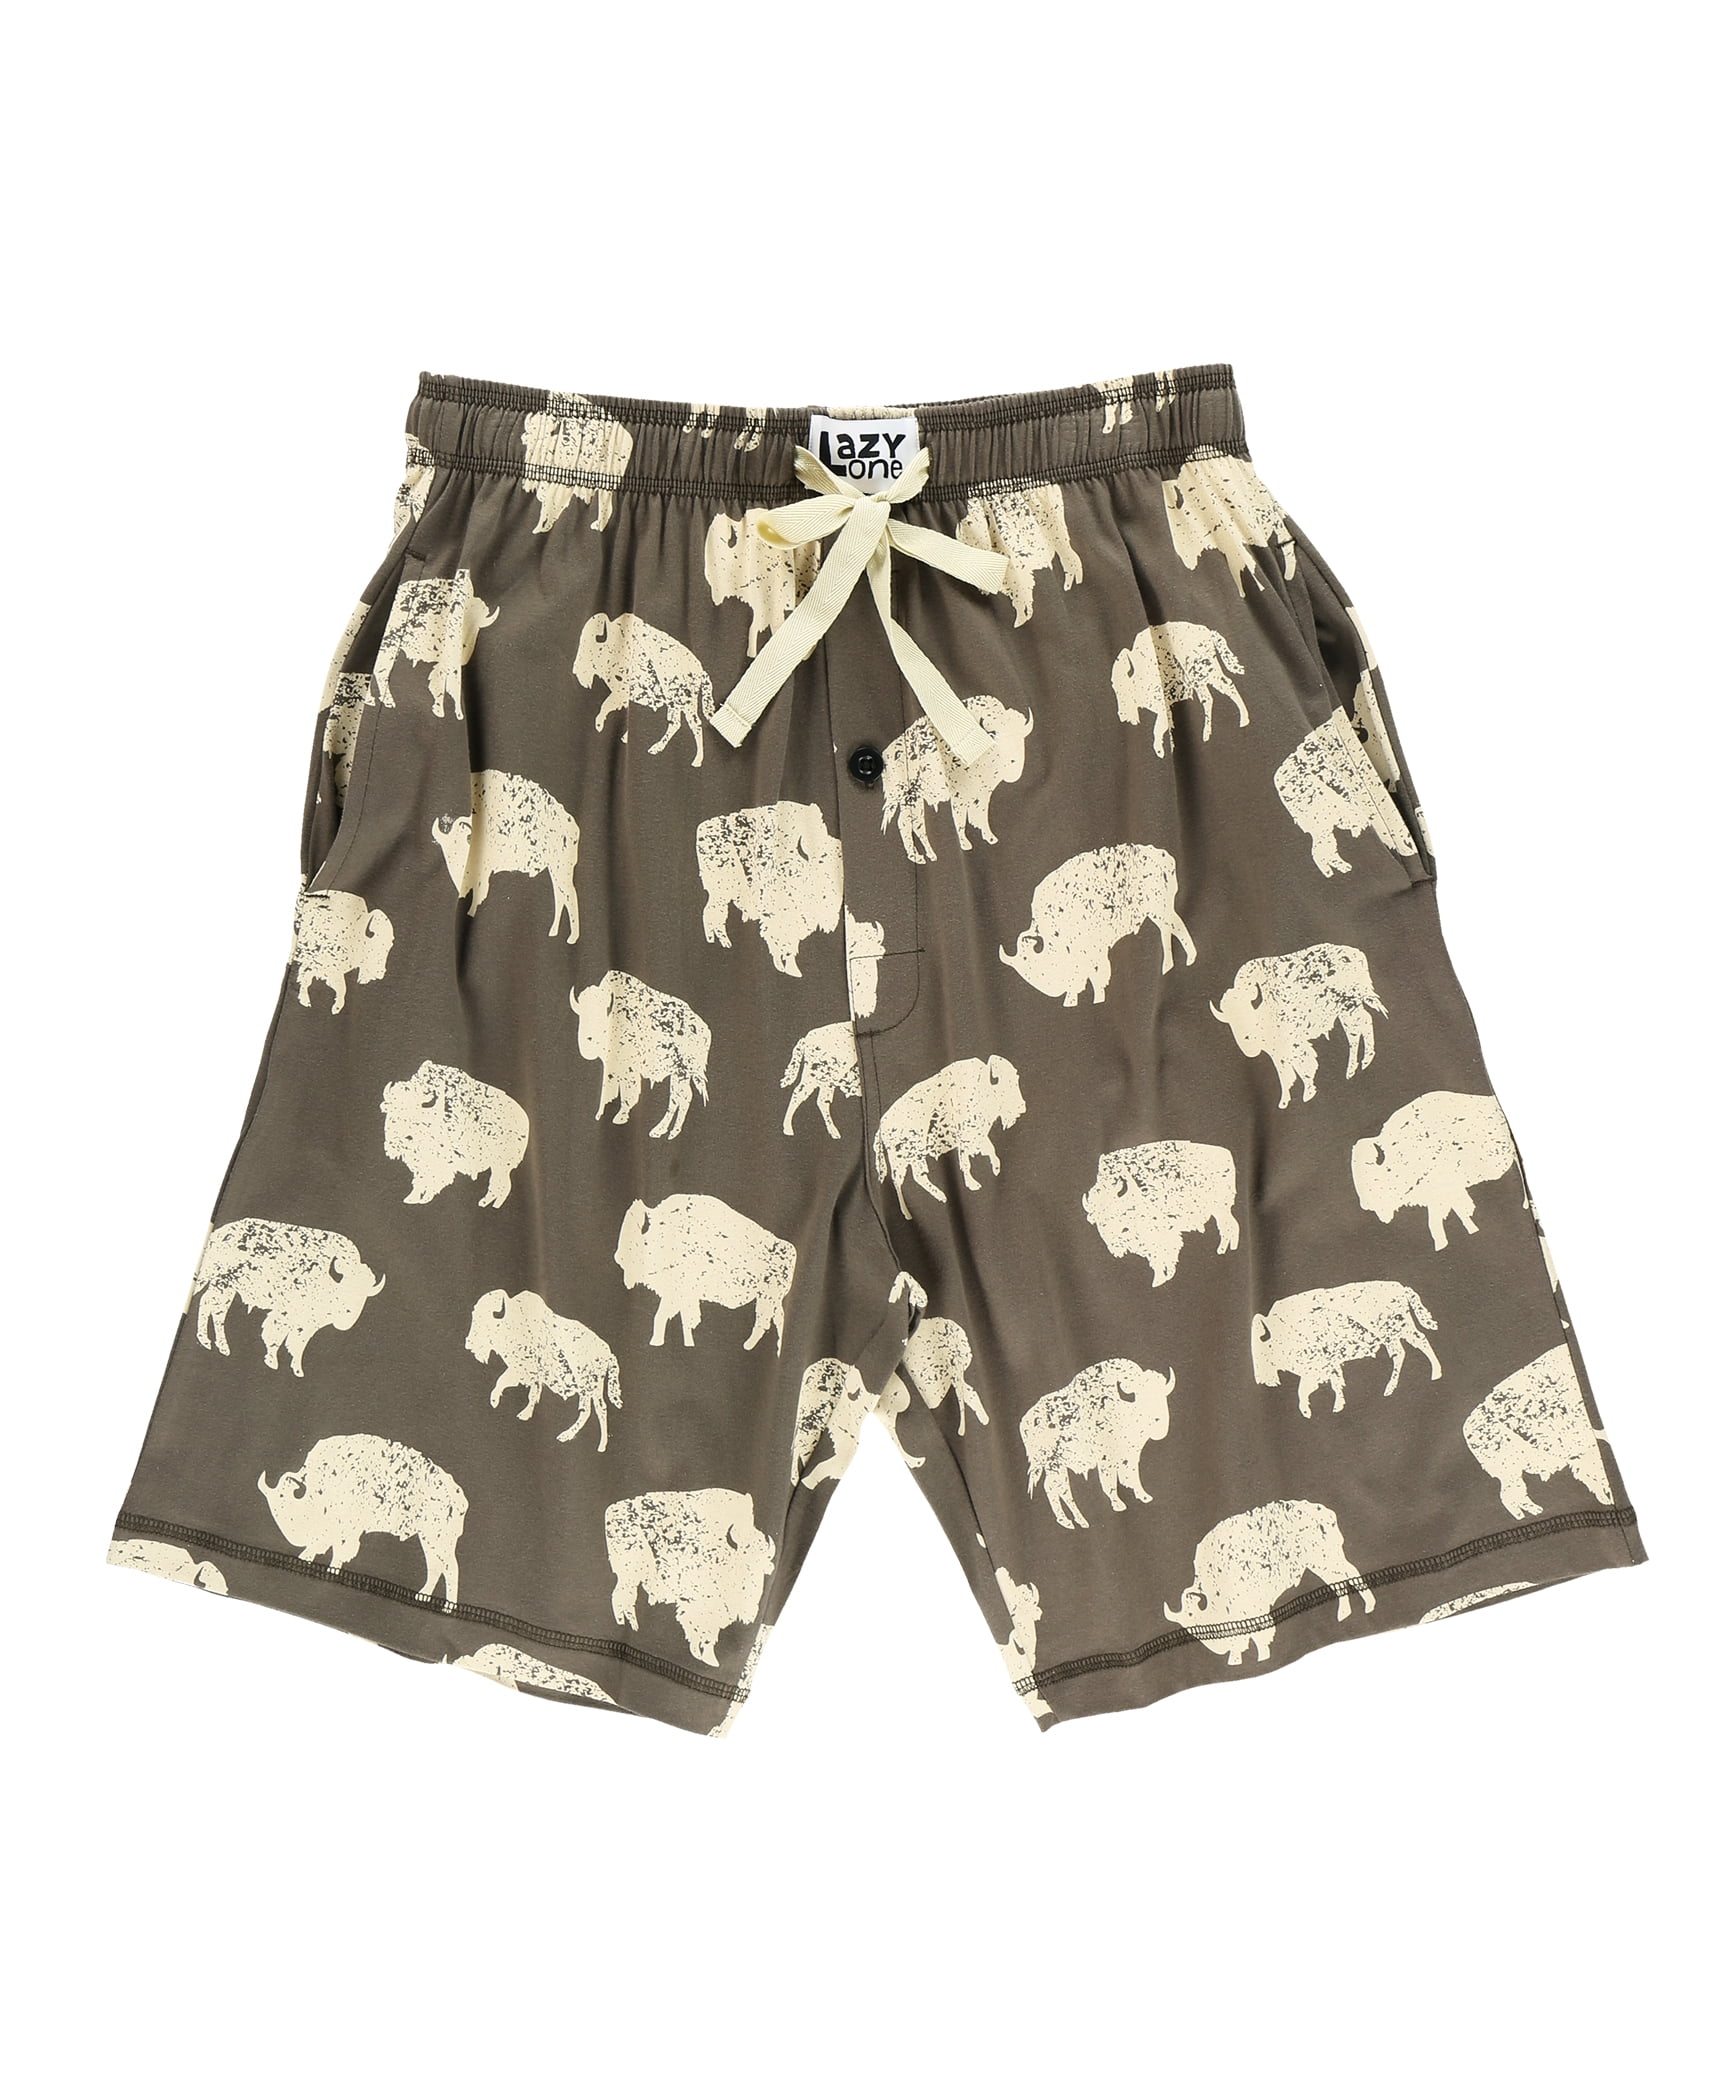 LazyOne Pajama Shorts for Men, Bass, Cotton Sleepwear, X-small 